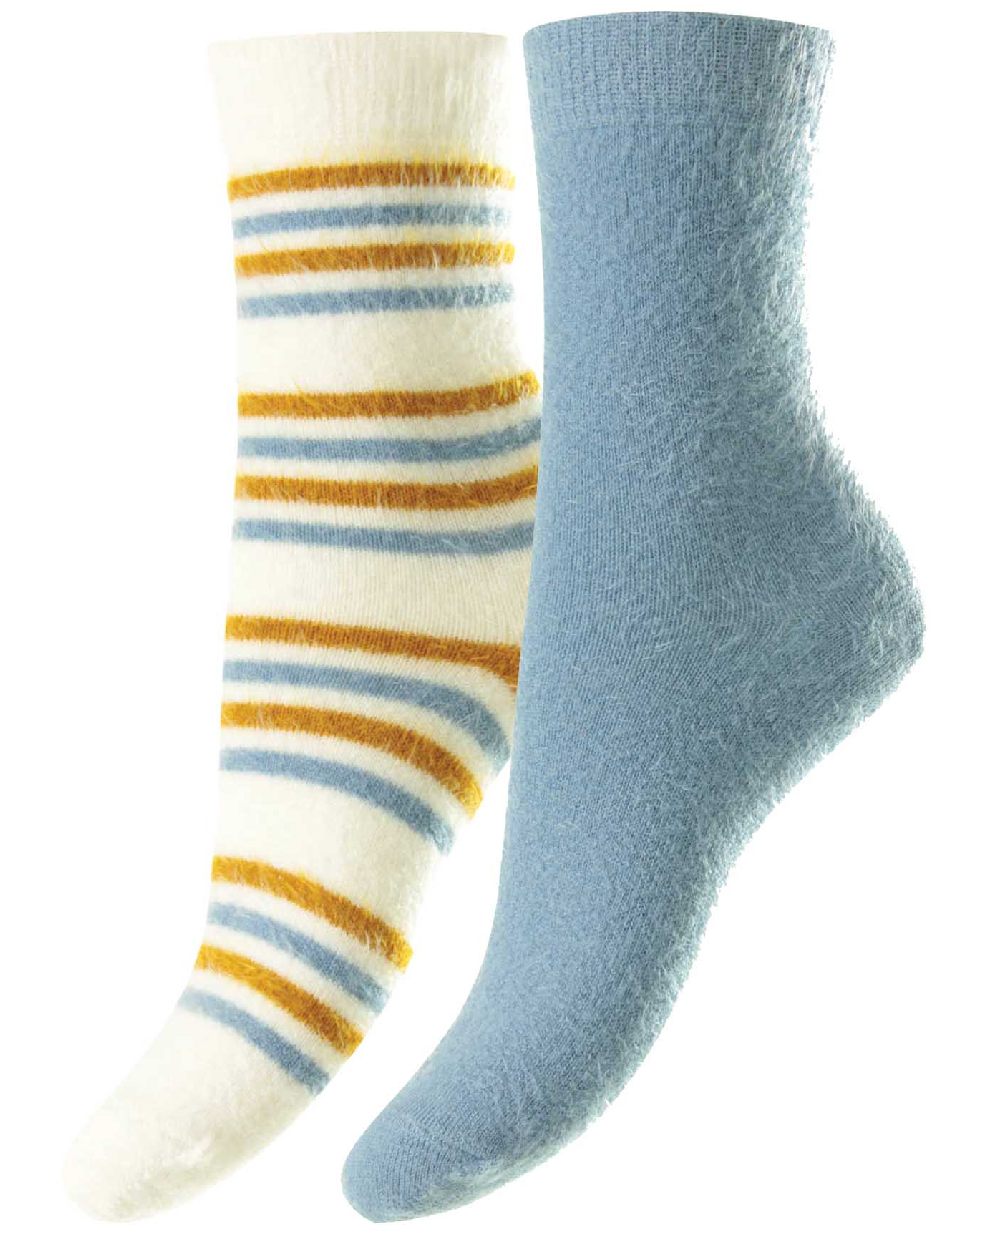 Pack of 6 Women's Animal Print Boot Socks, Summer Walking Hiking Sock  Cotton Rich. Buy Now For £7.00.